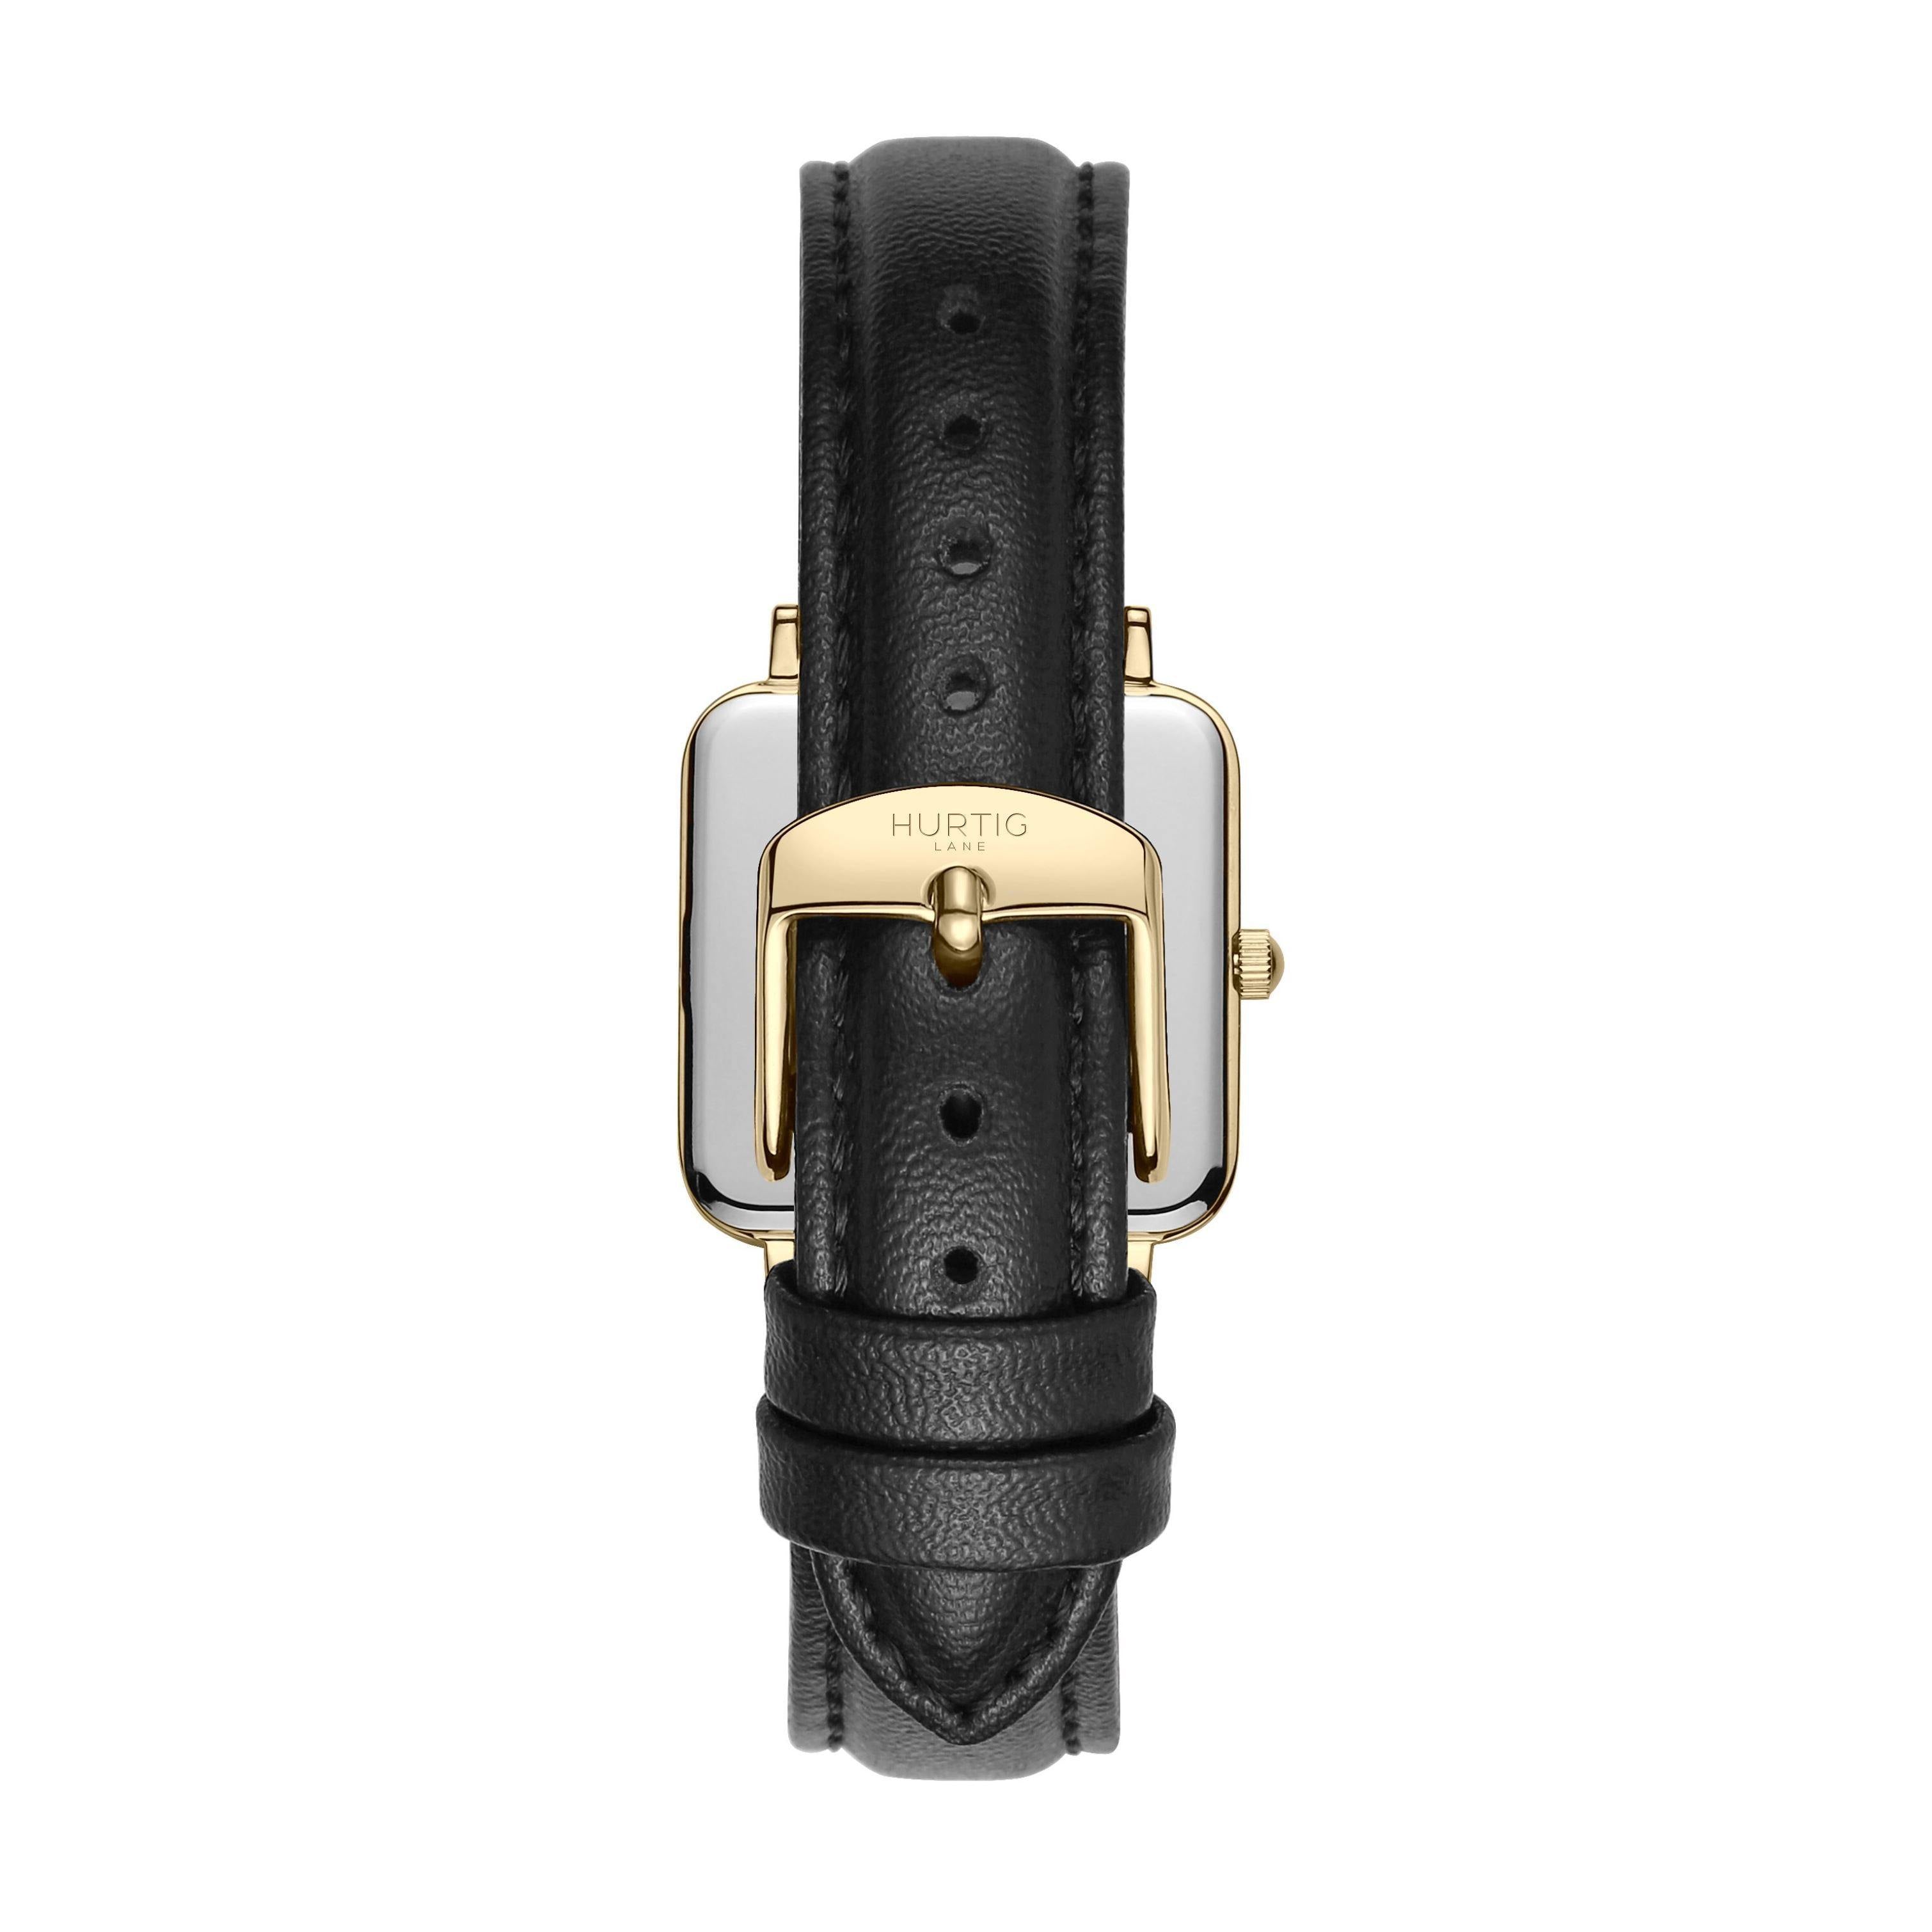 Neliö Square Vegan Leather Watch Gold, Black & Black